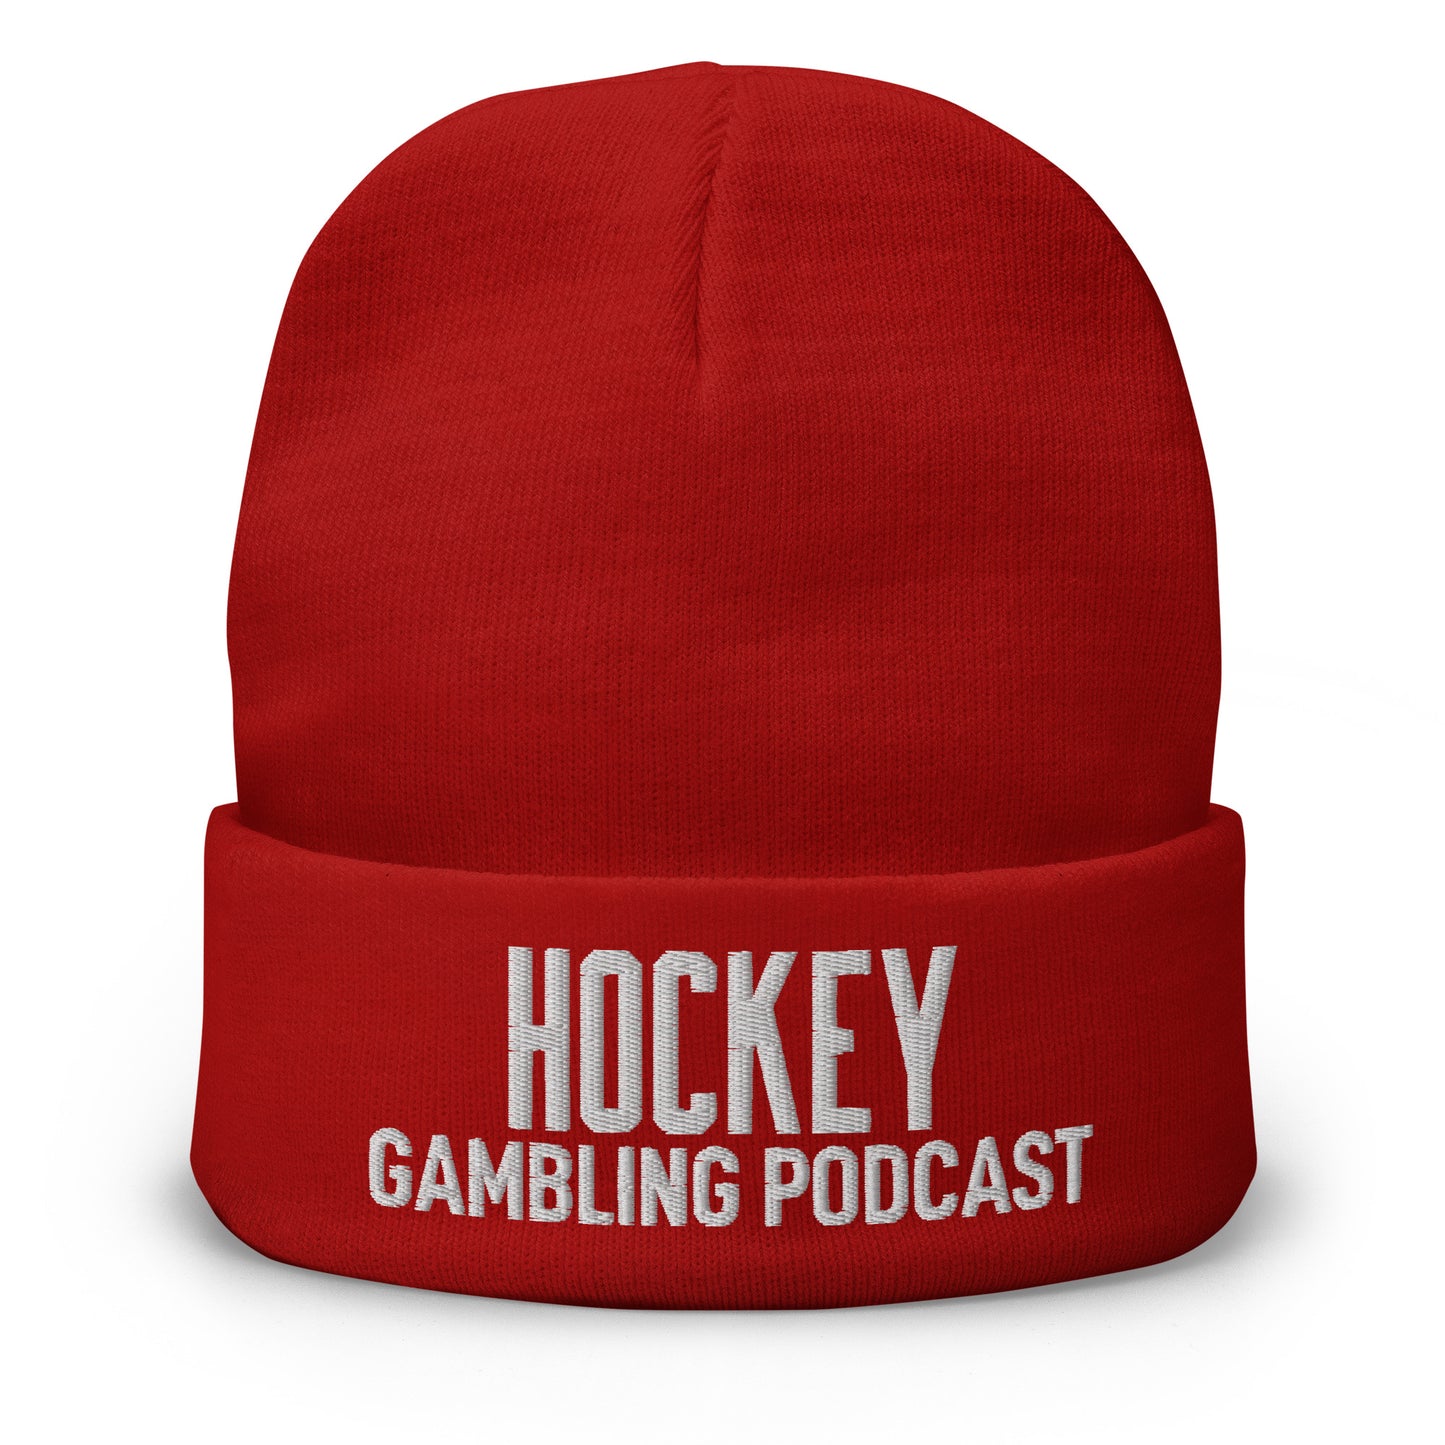 Hockey Gambling Podcast - Embroidered Beanie (White Logo)